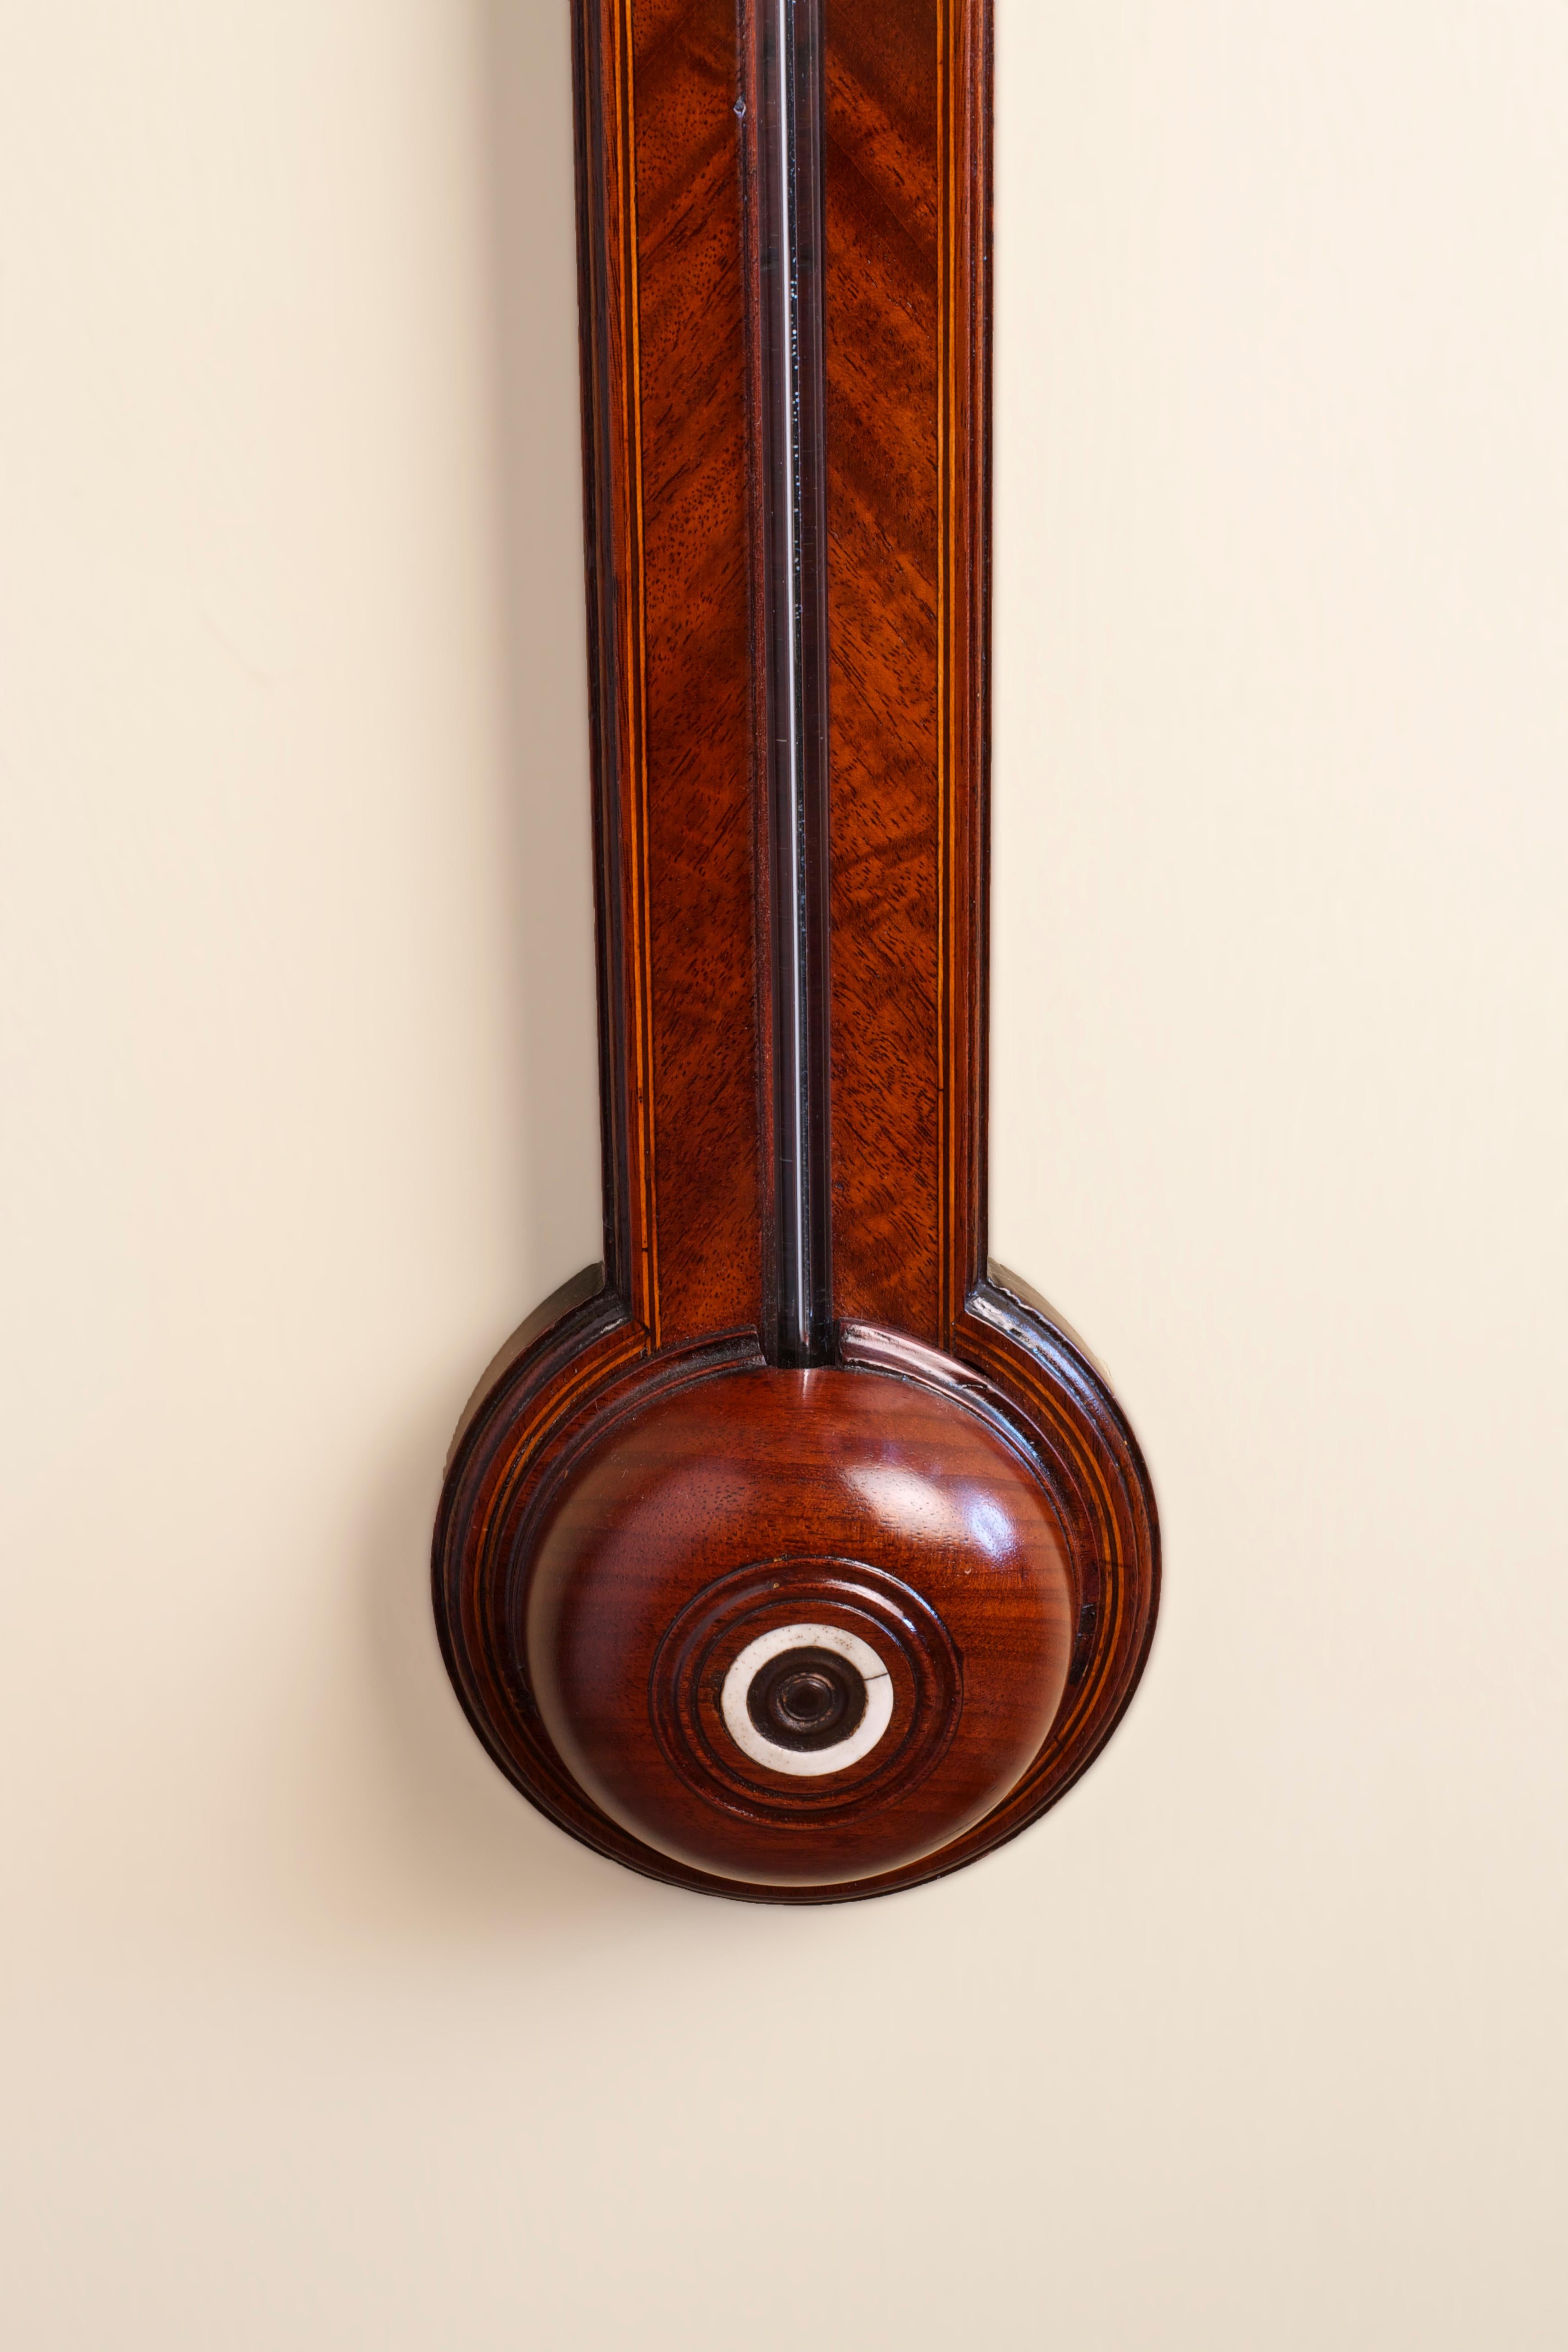 English George III Stick Barometer by Negretty & Co, London